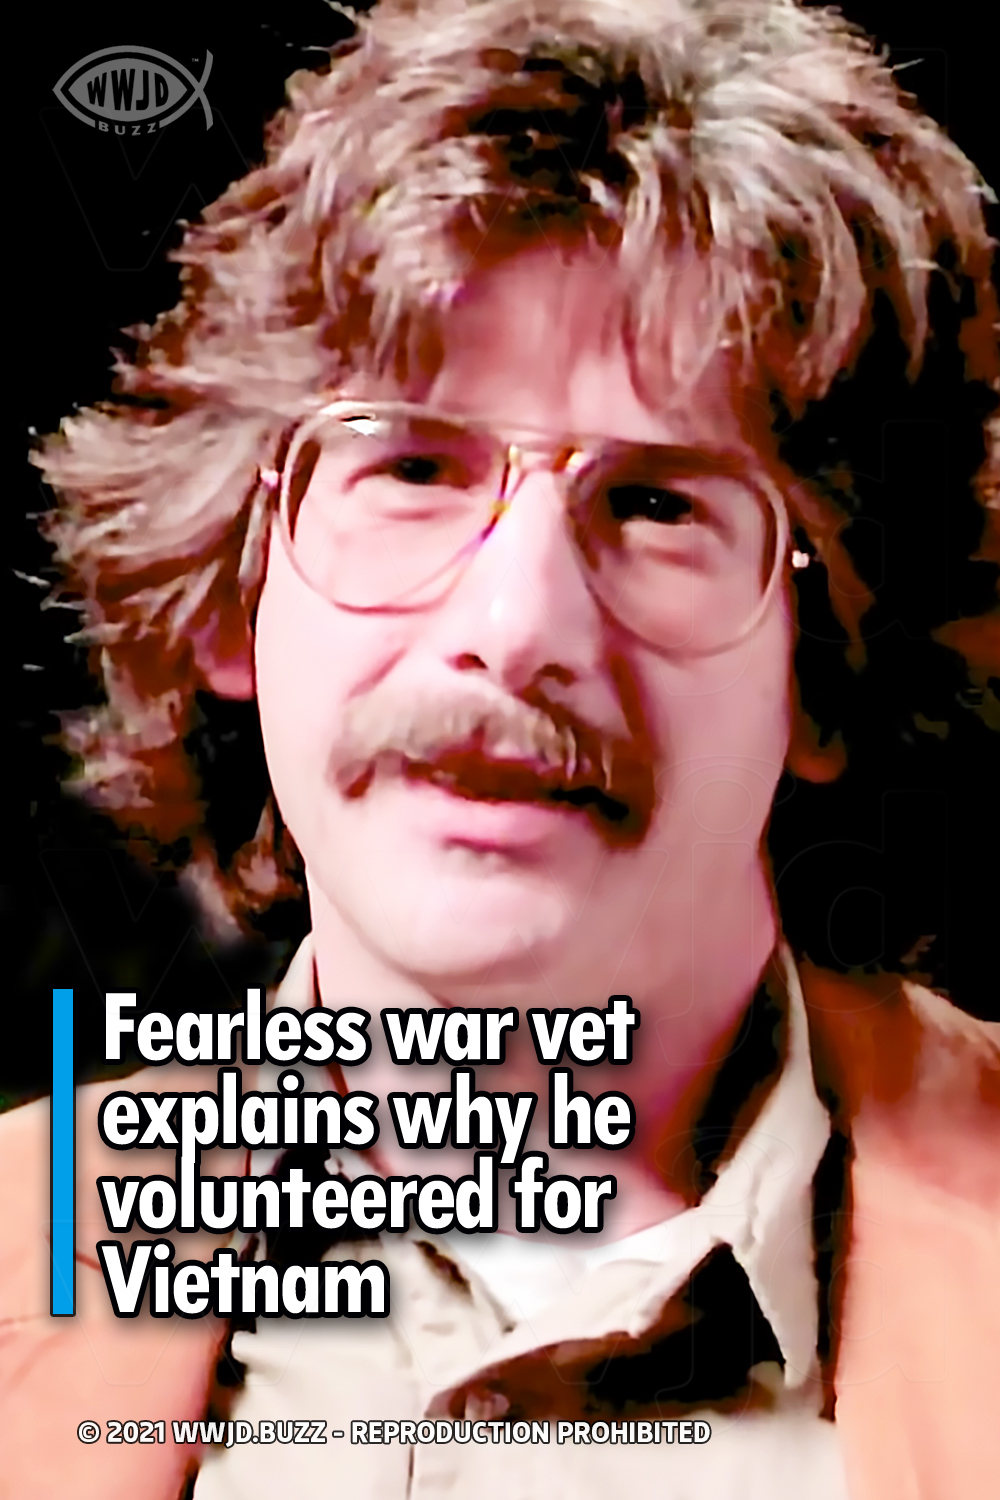 Fearless war vet explains why he volunteered for Vietnam